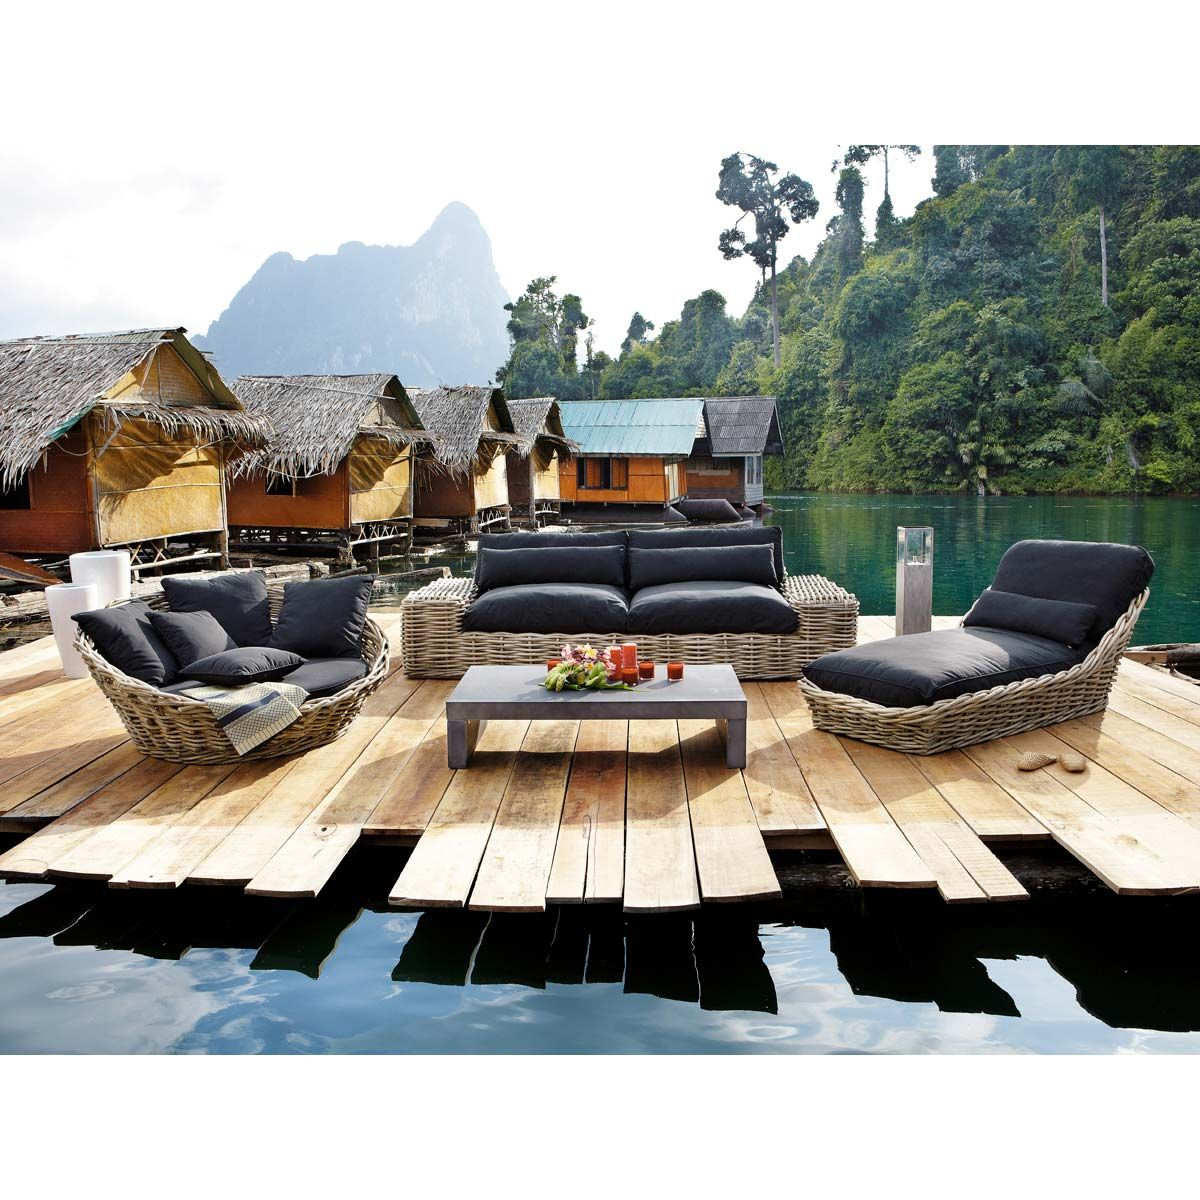 Outdoor Furniture In 2020 | Outdoor Furniture Sets, Outdoor ... tout Salon De Jardin Maison Du Monde